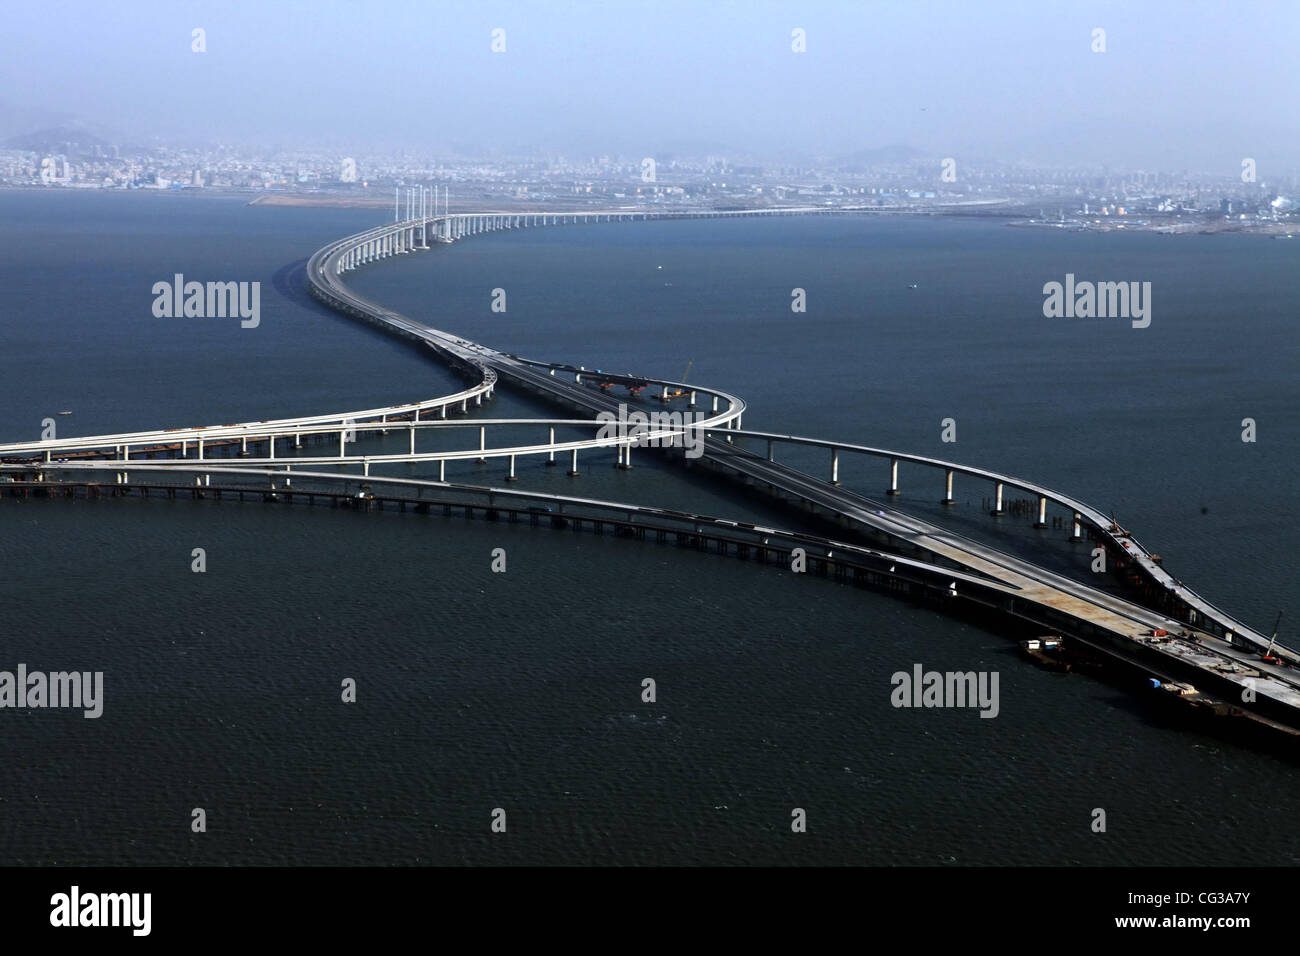 china longest bridge images clipart